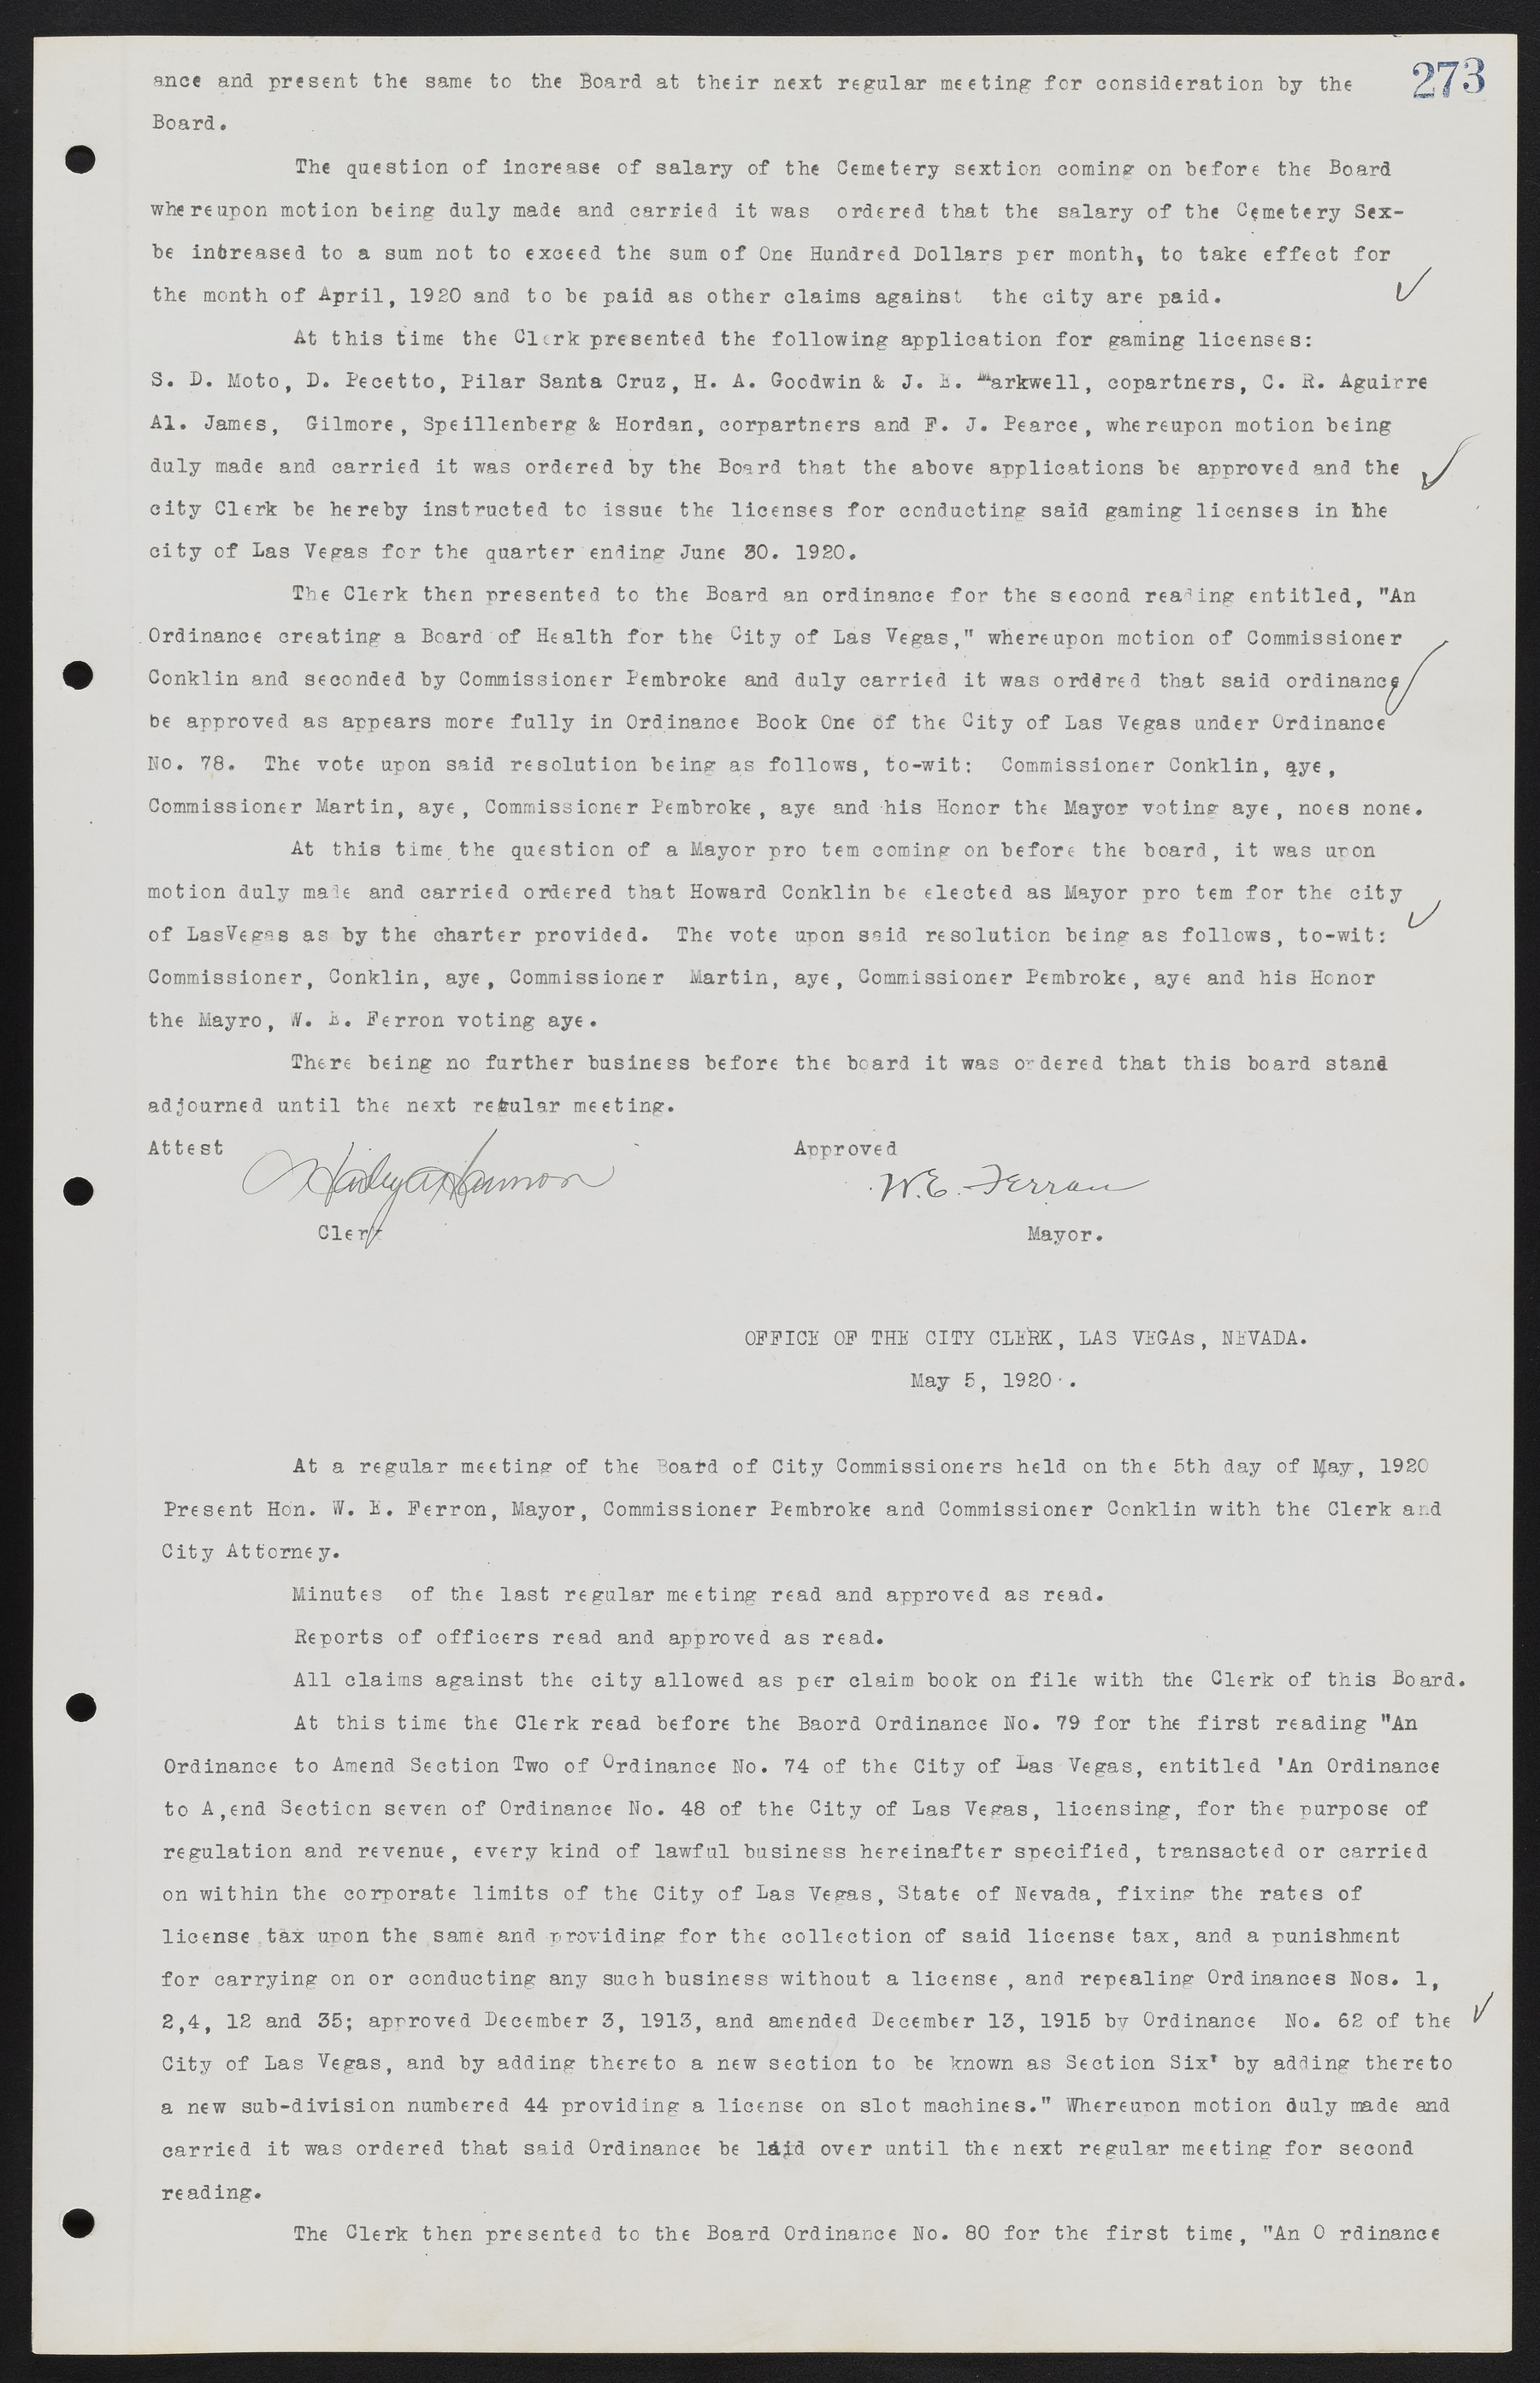 Las Vegas City Commission Minutes, June 22, 1911 to February 7, 1922, lvc000001-289